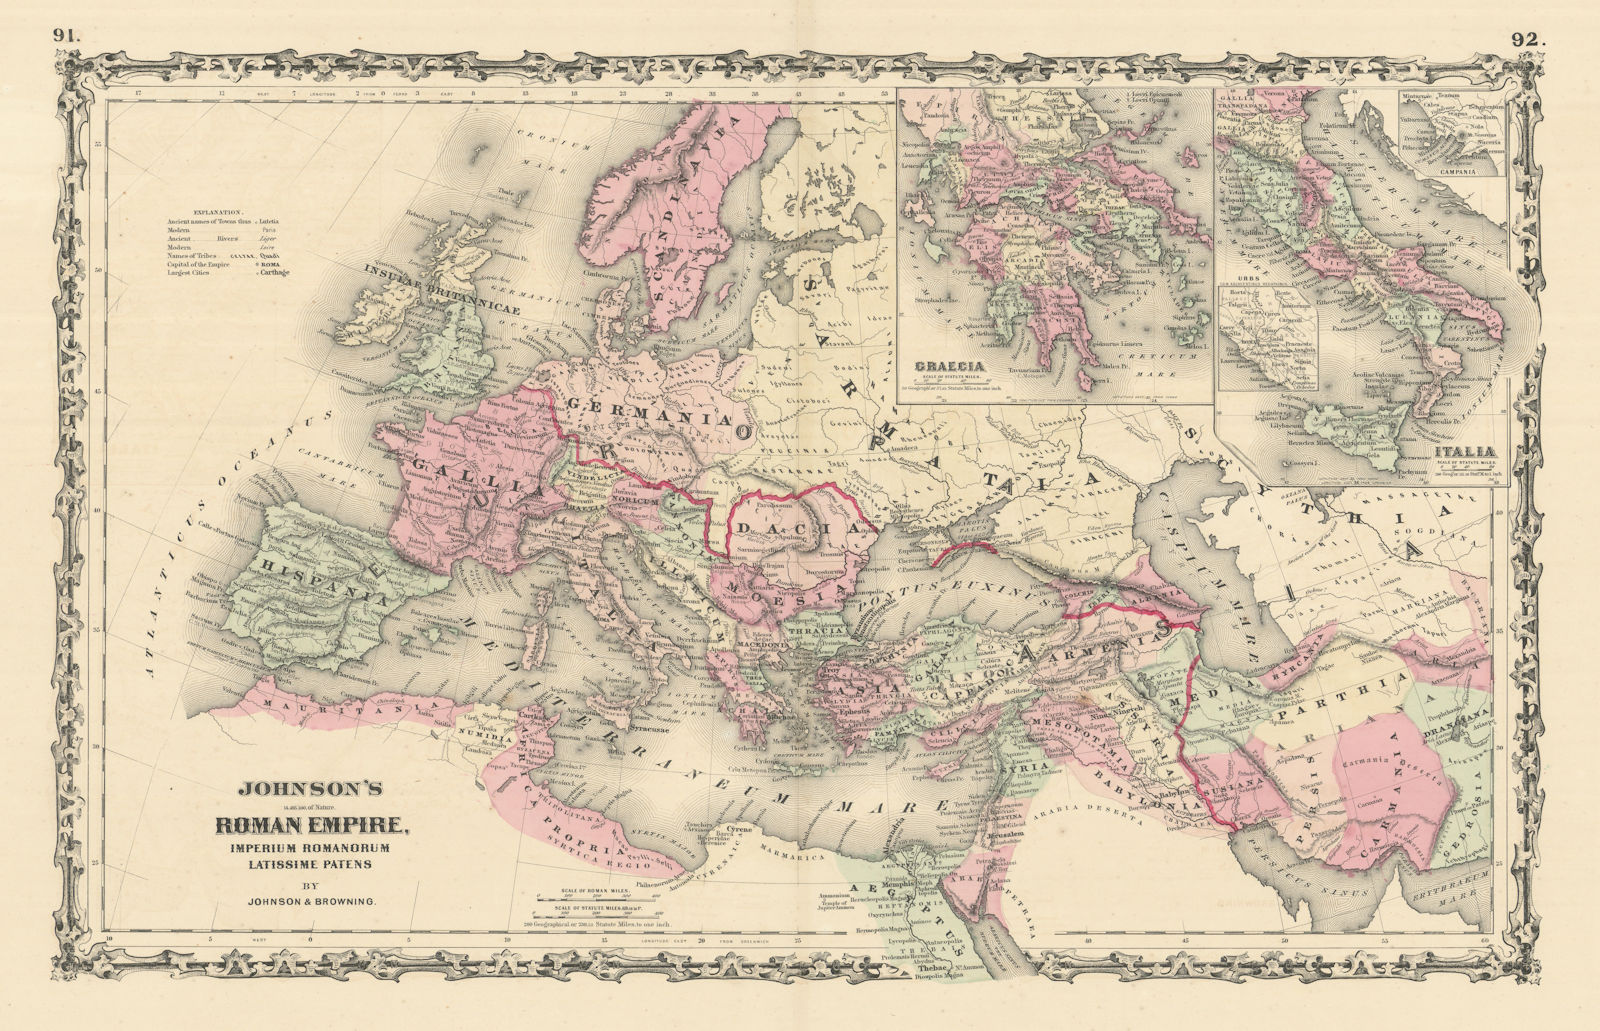 Johnson's Roman Empire. Imperium Romanorum. Graecia Italia Greece Italy 1861 map